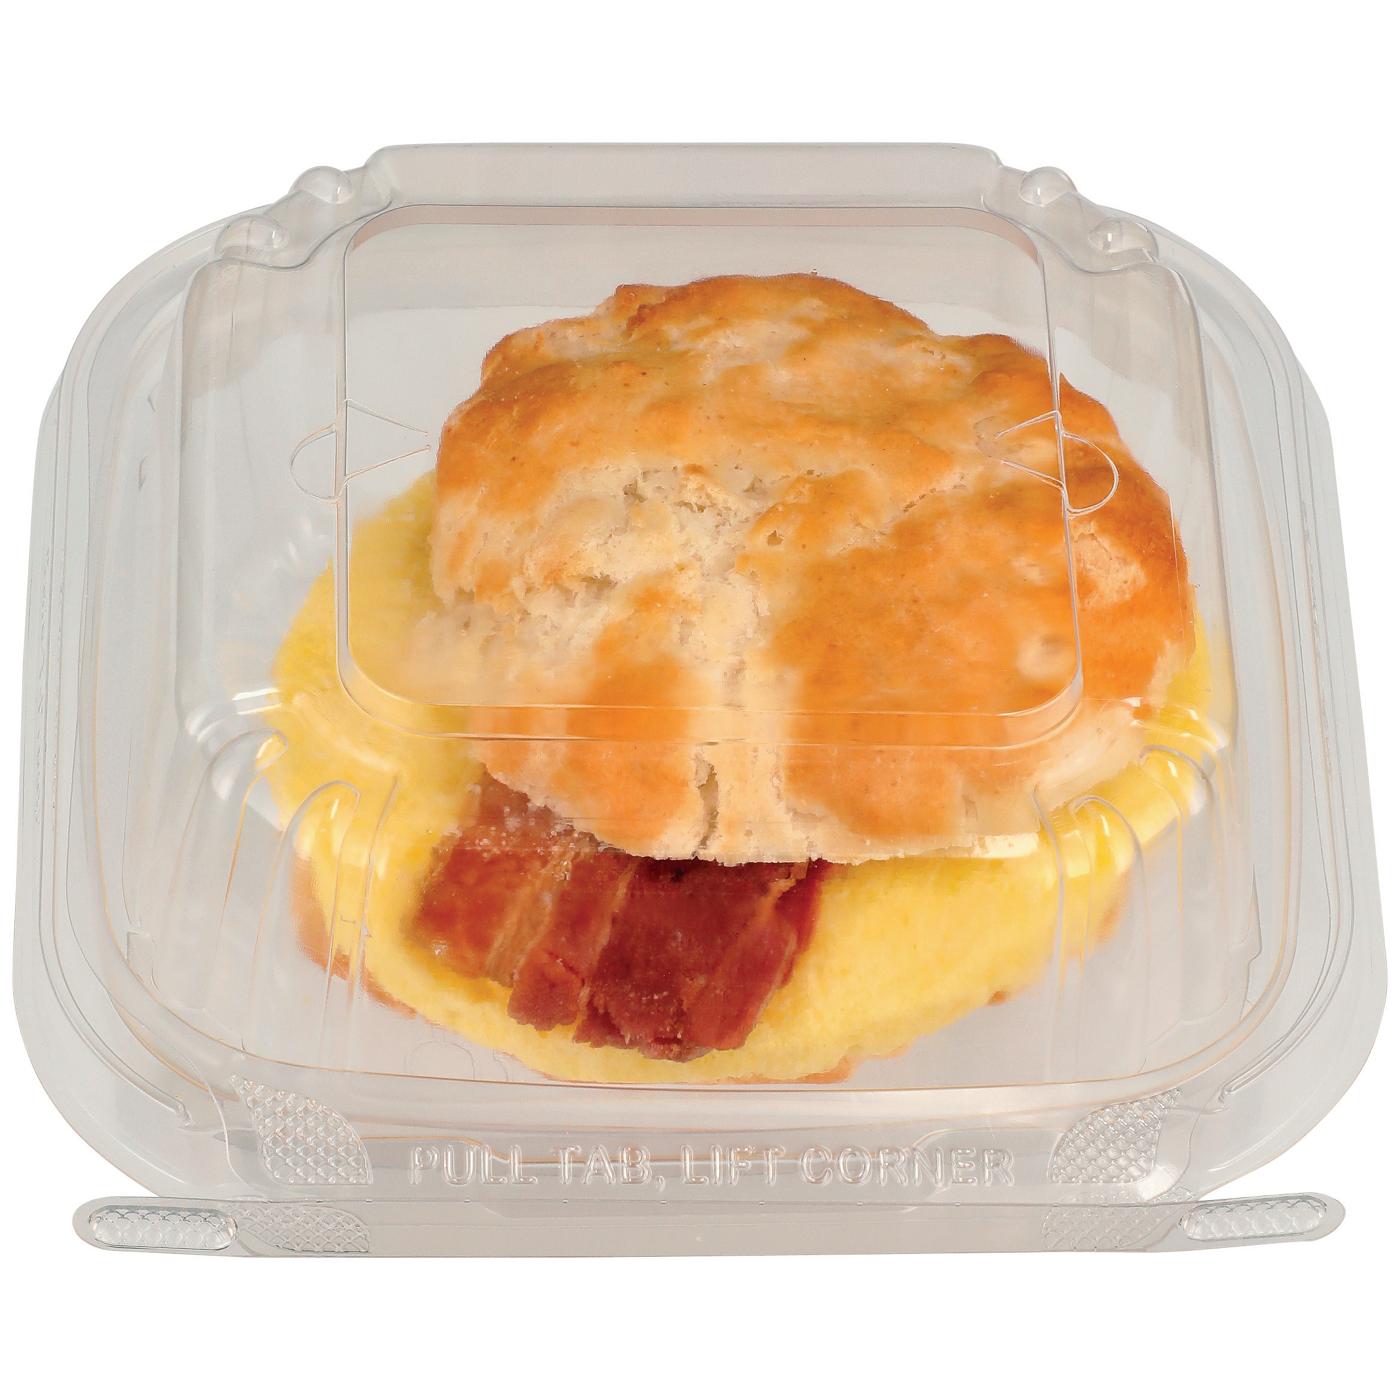 H-E-B Bakery Biscuit Breakfast Sandwich - Bacon & Egg; image 1 of 3